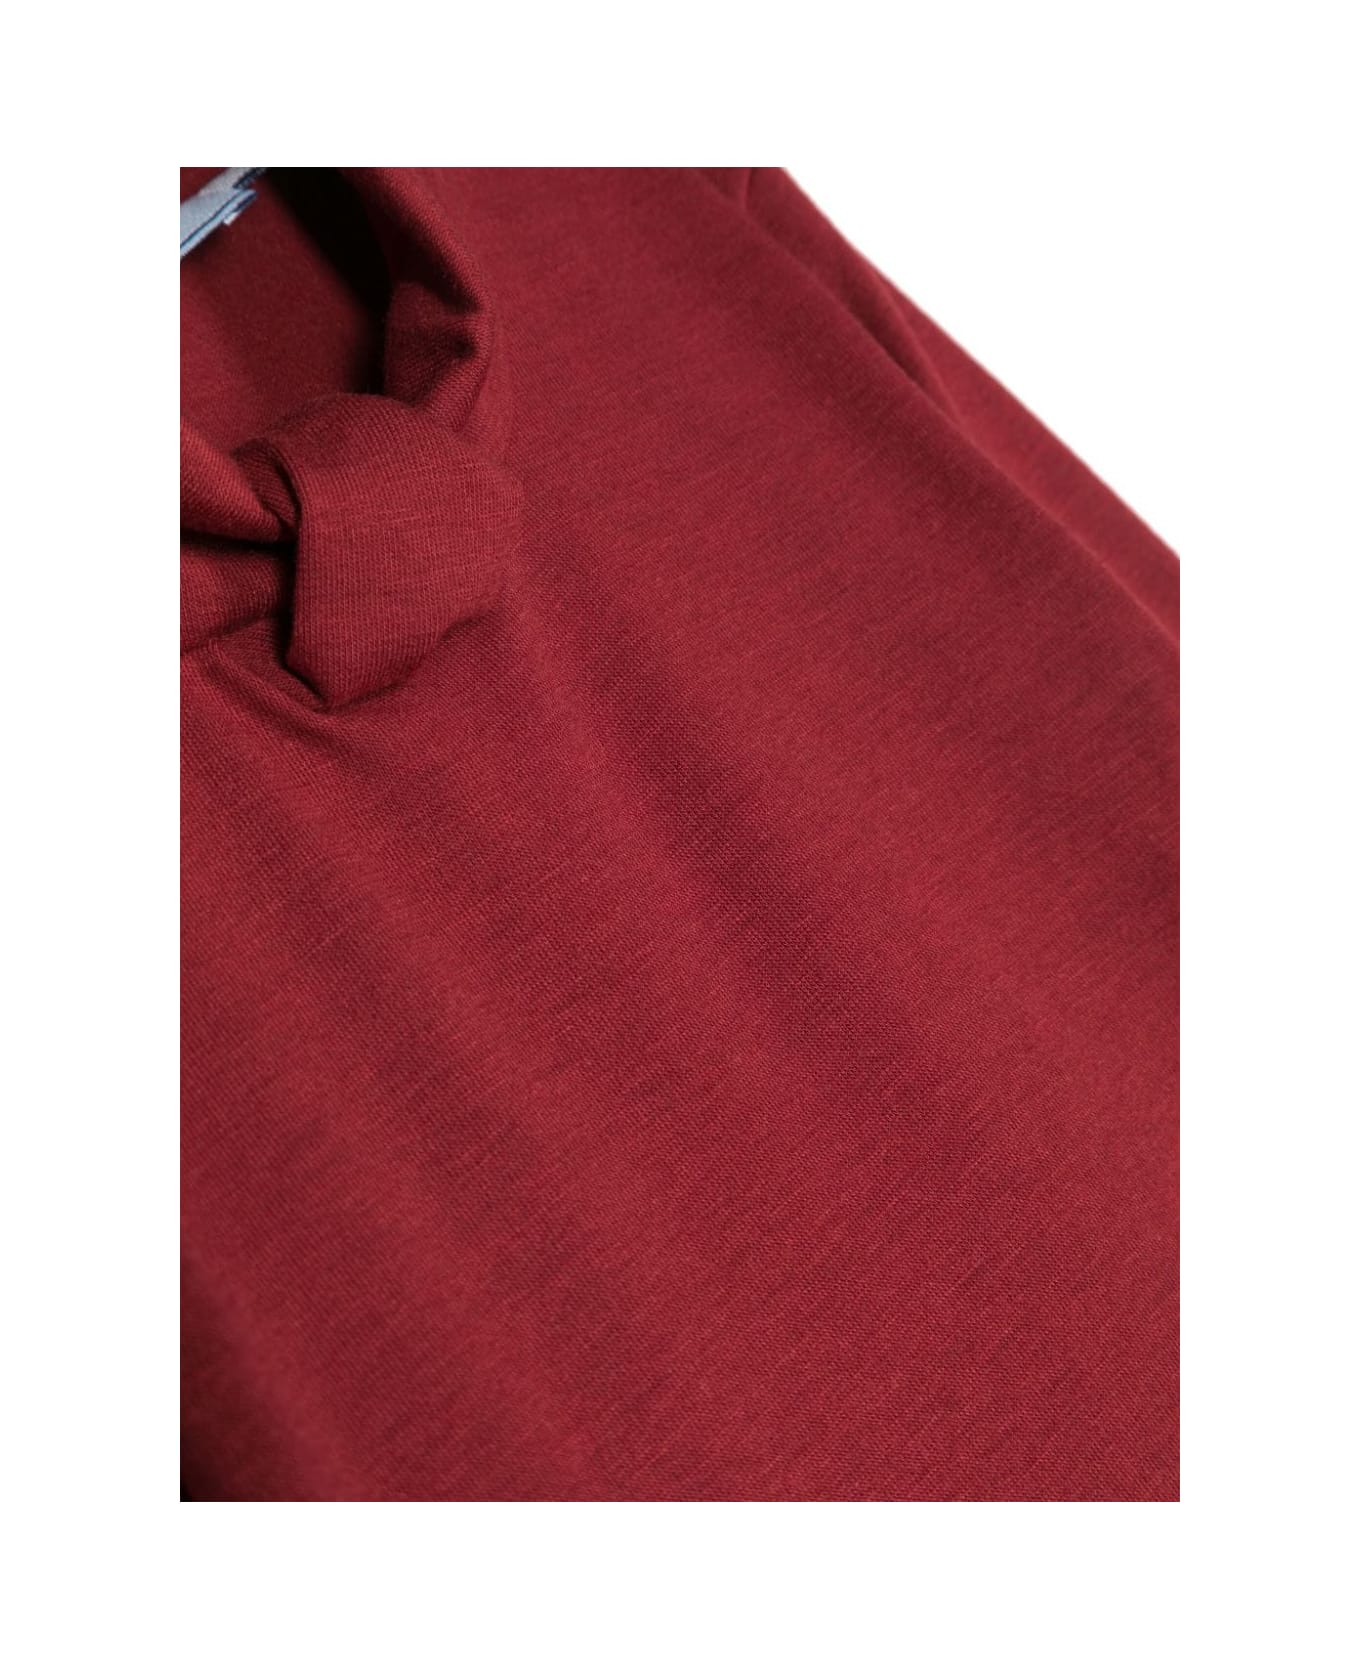 MiMiSol T-shirt With Raised Collar - Bordeaux